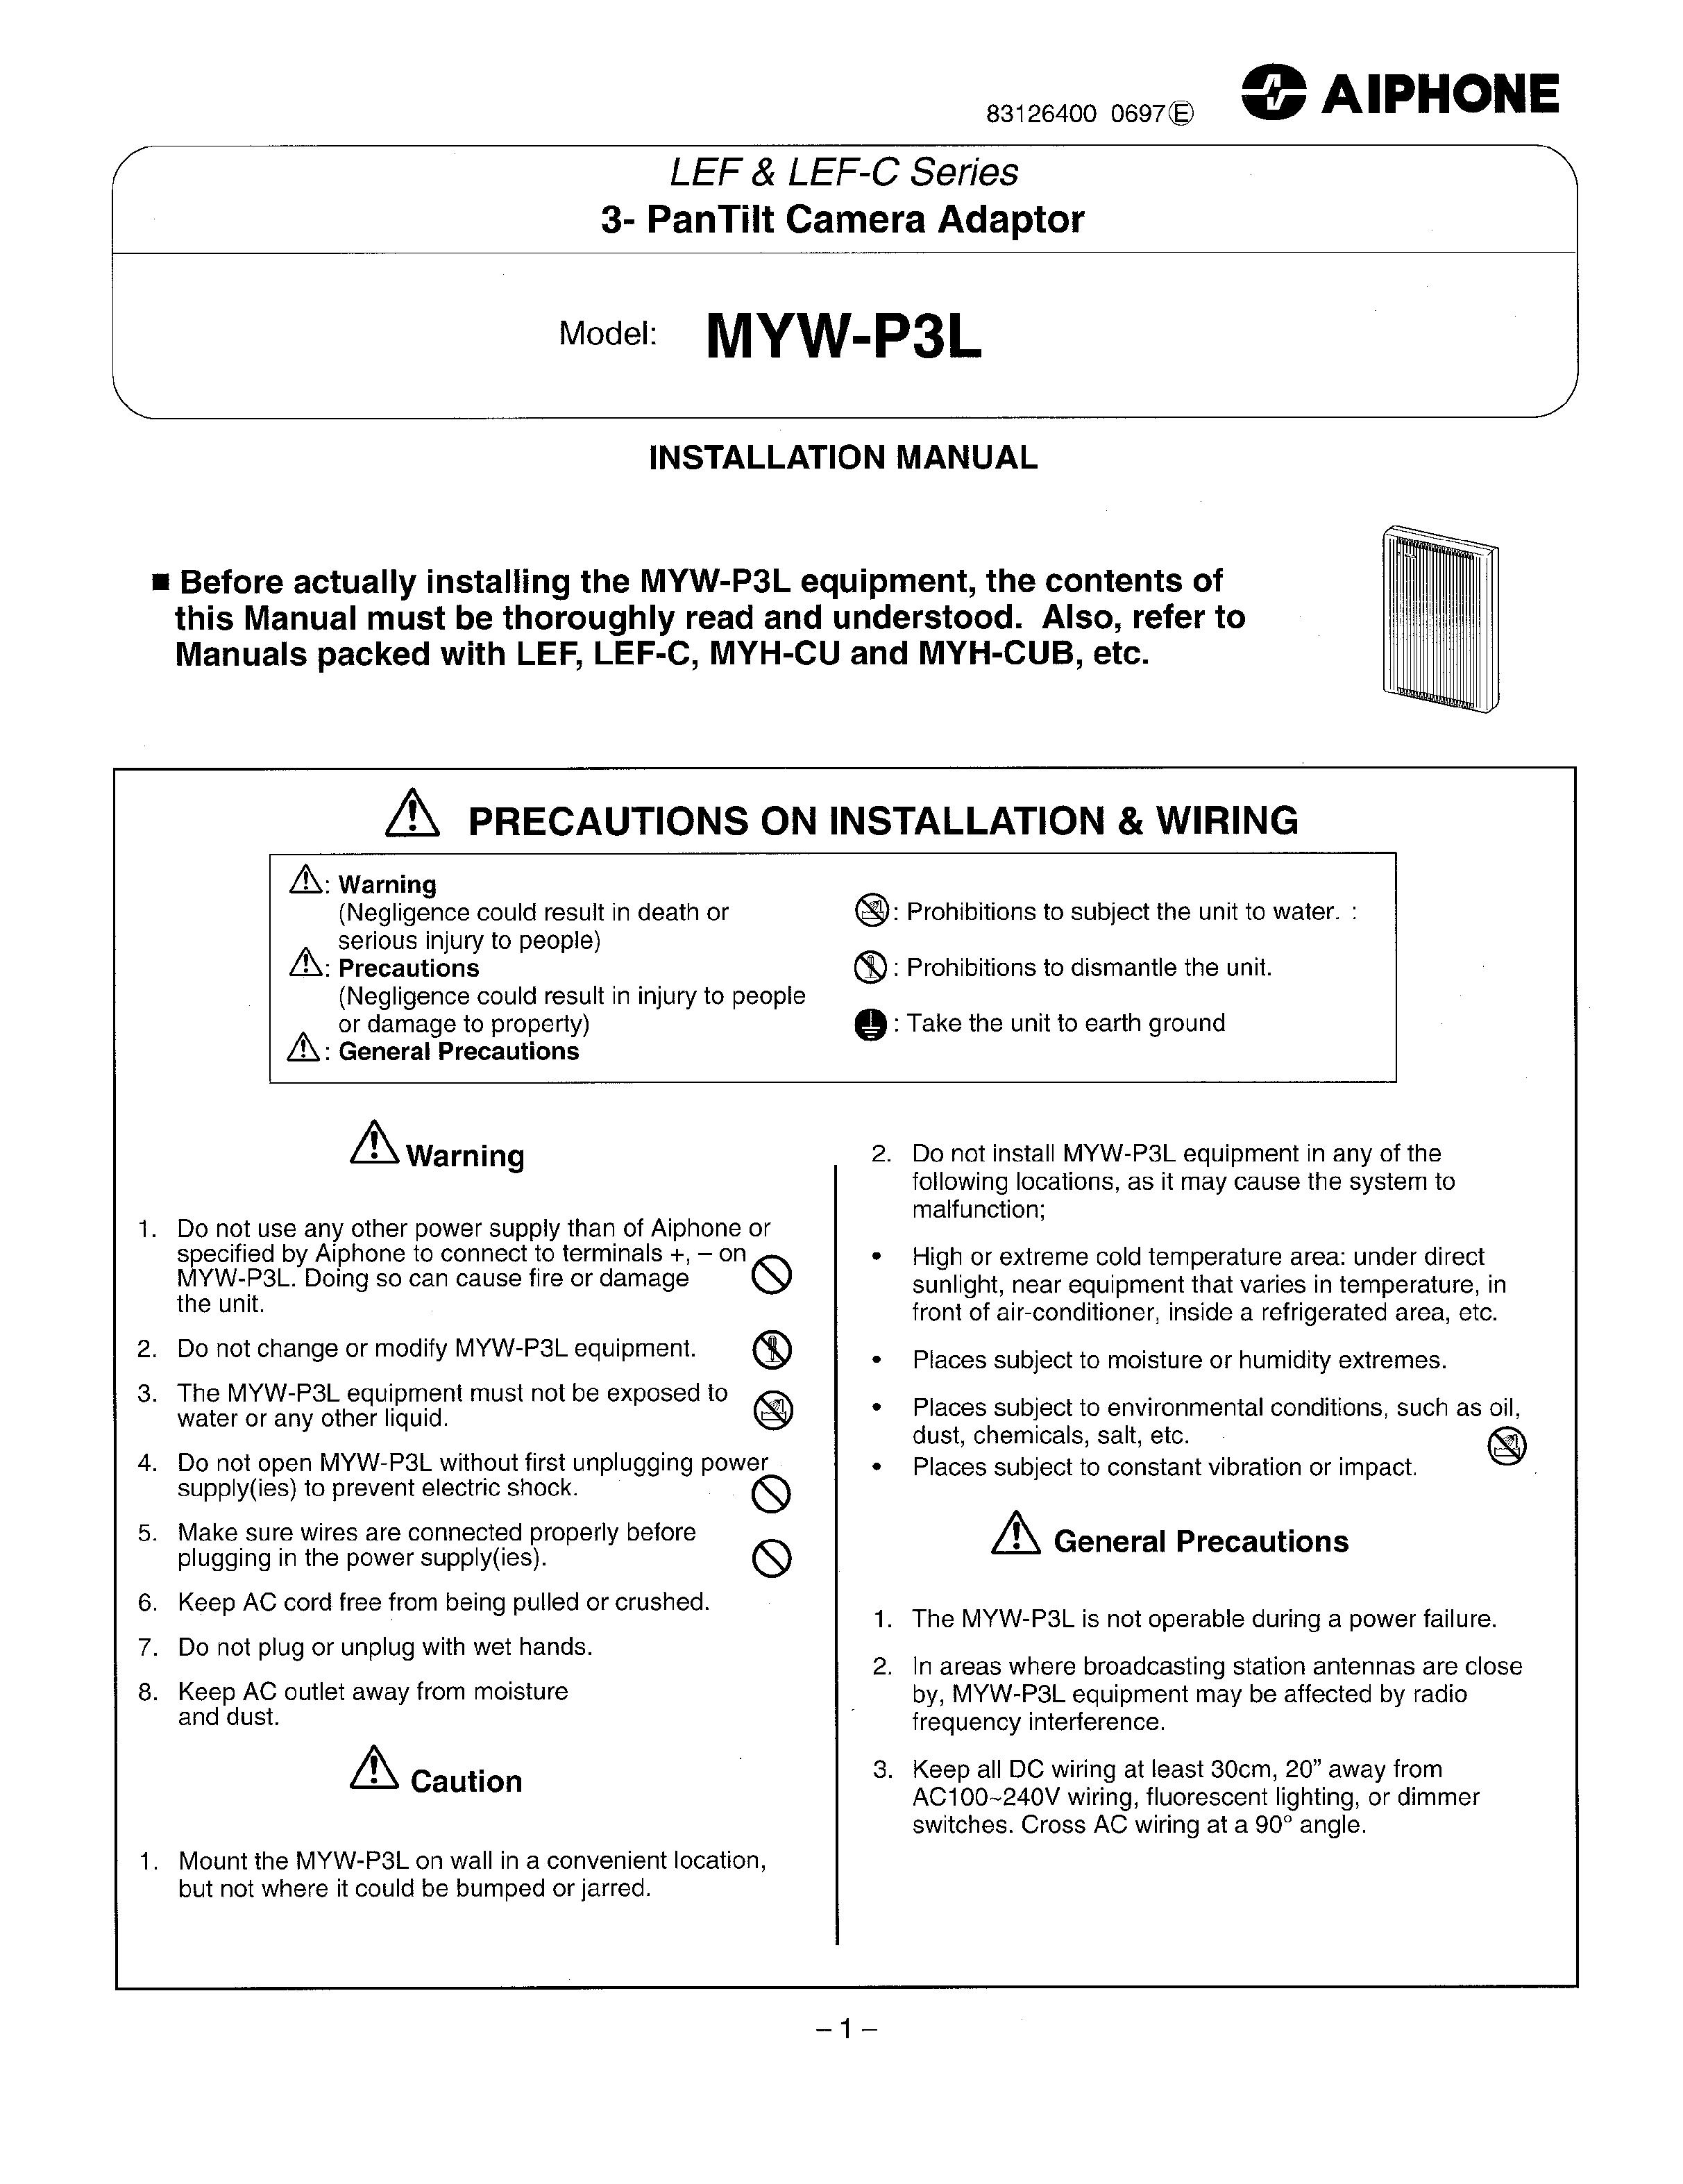 Aiphone MYW-P3L Camera Accessories User Manual